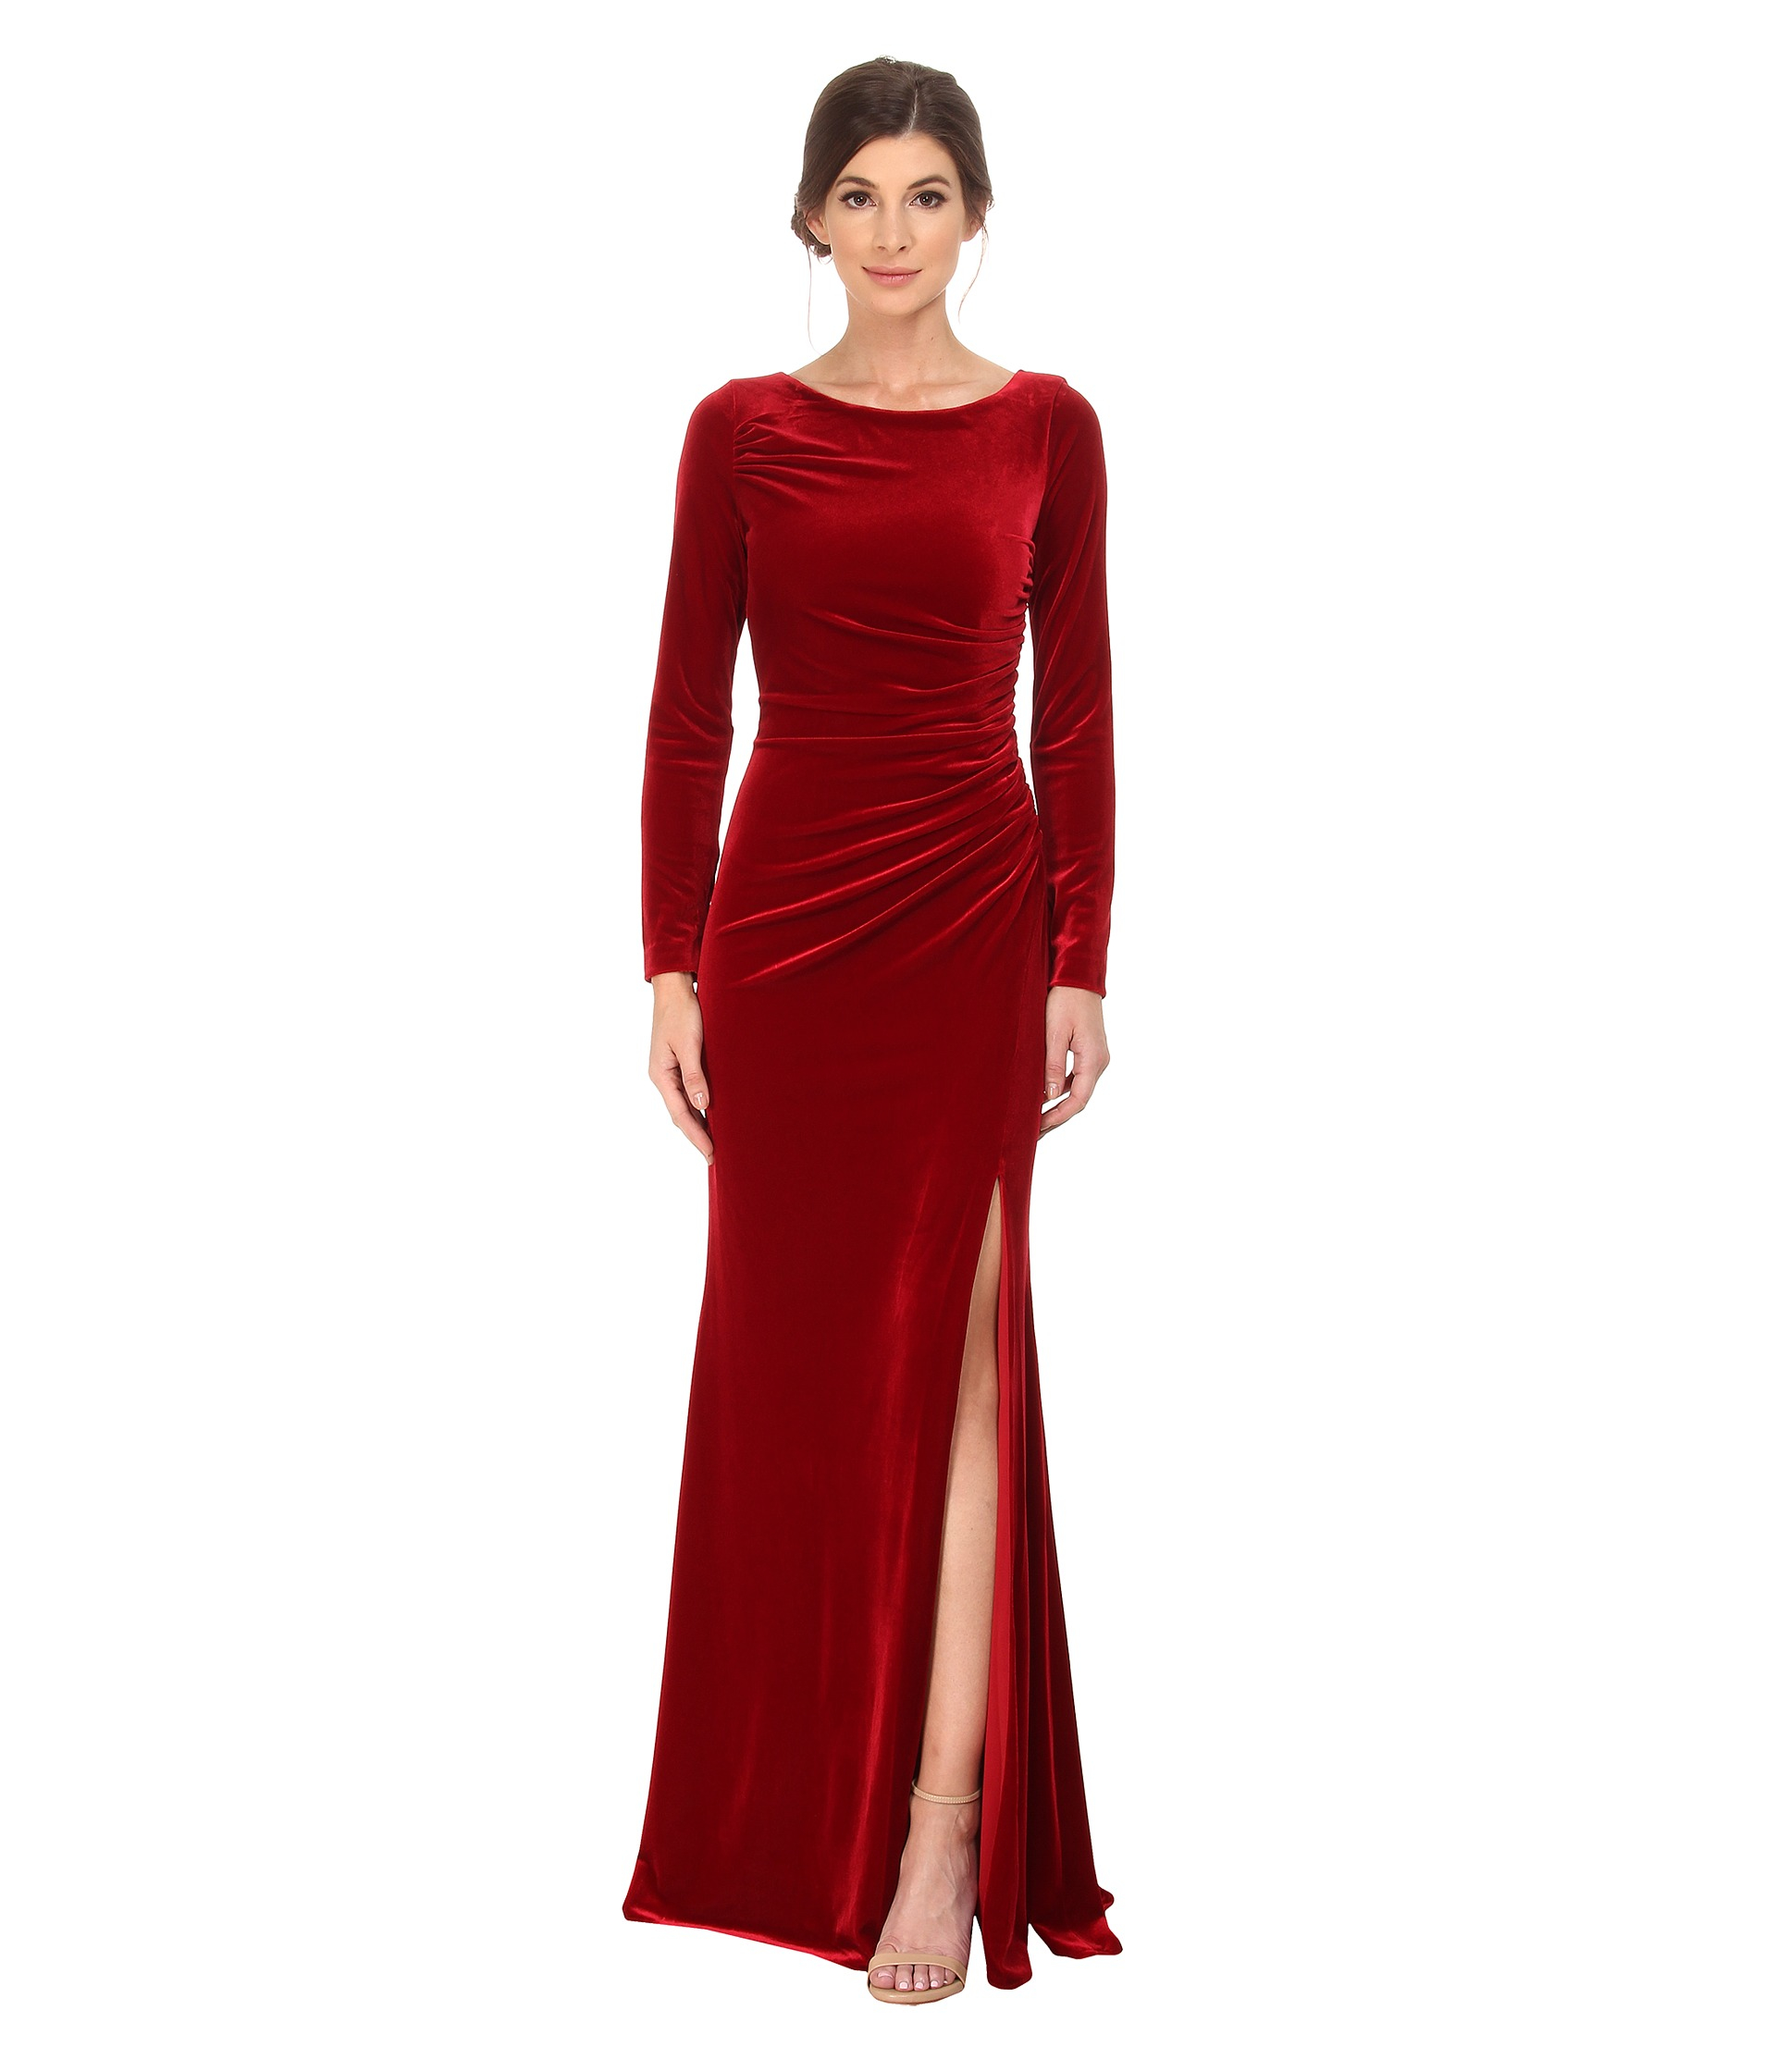 Lyst - Badgley Mischka Long Sleeve Stretch Velvet Gown in Red